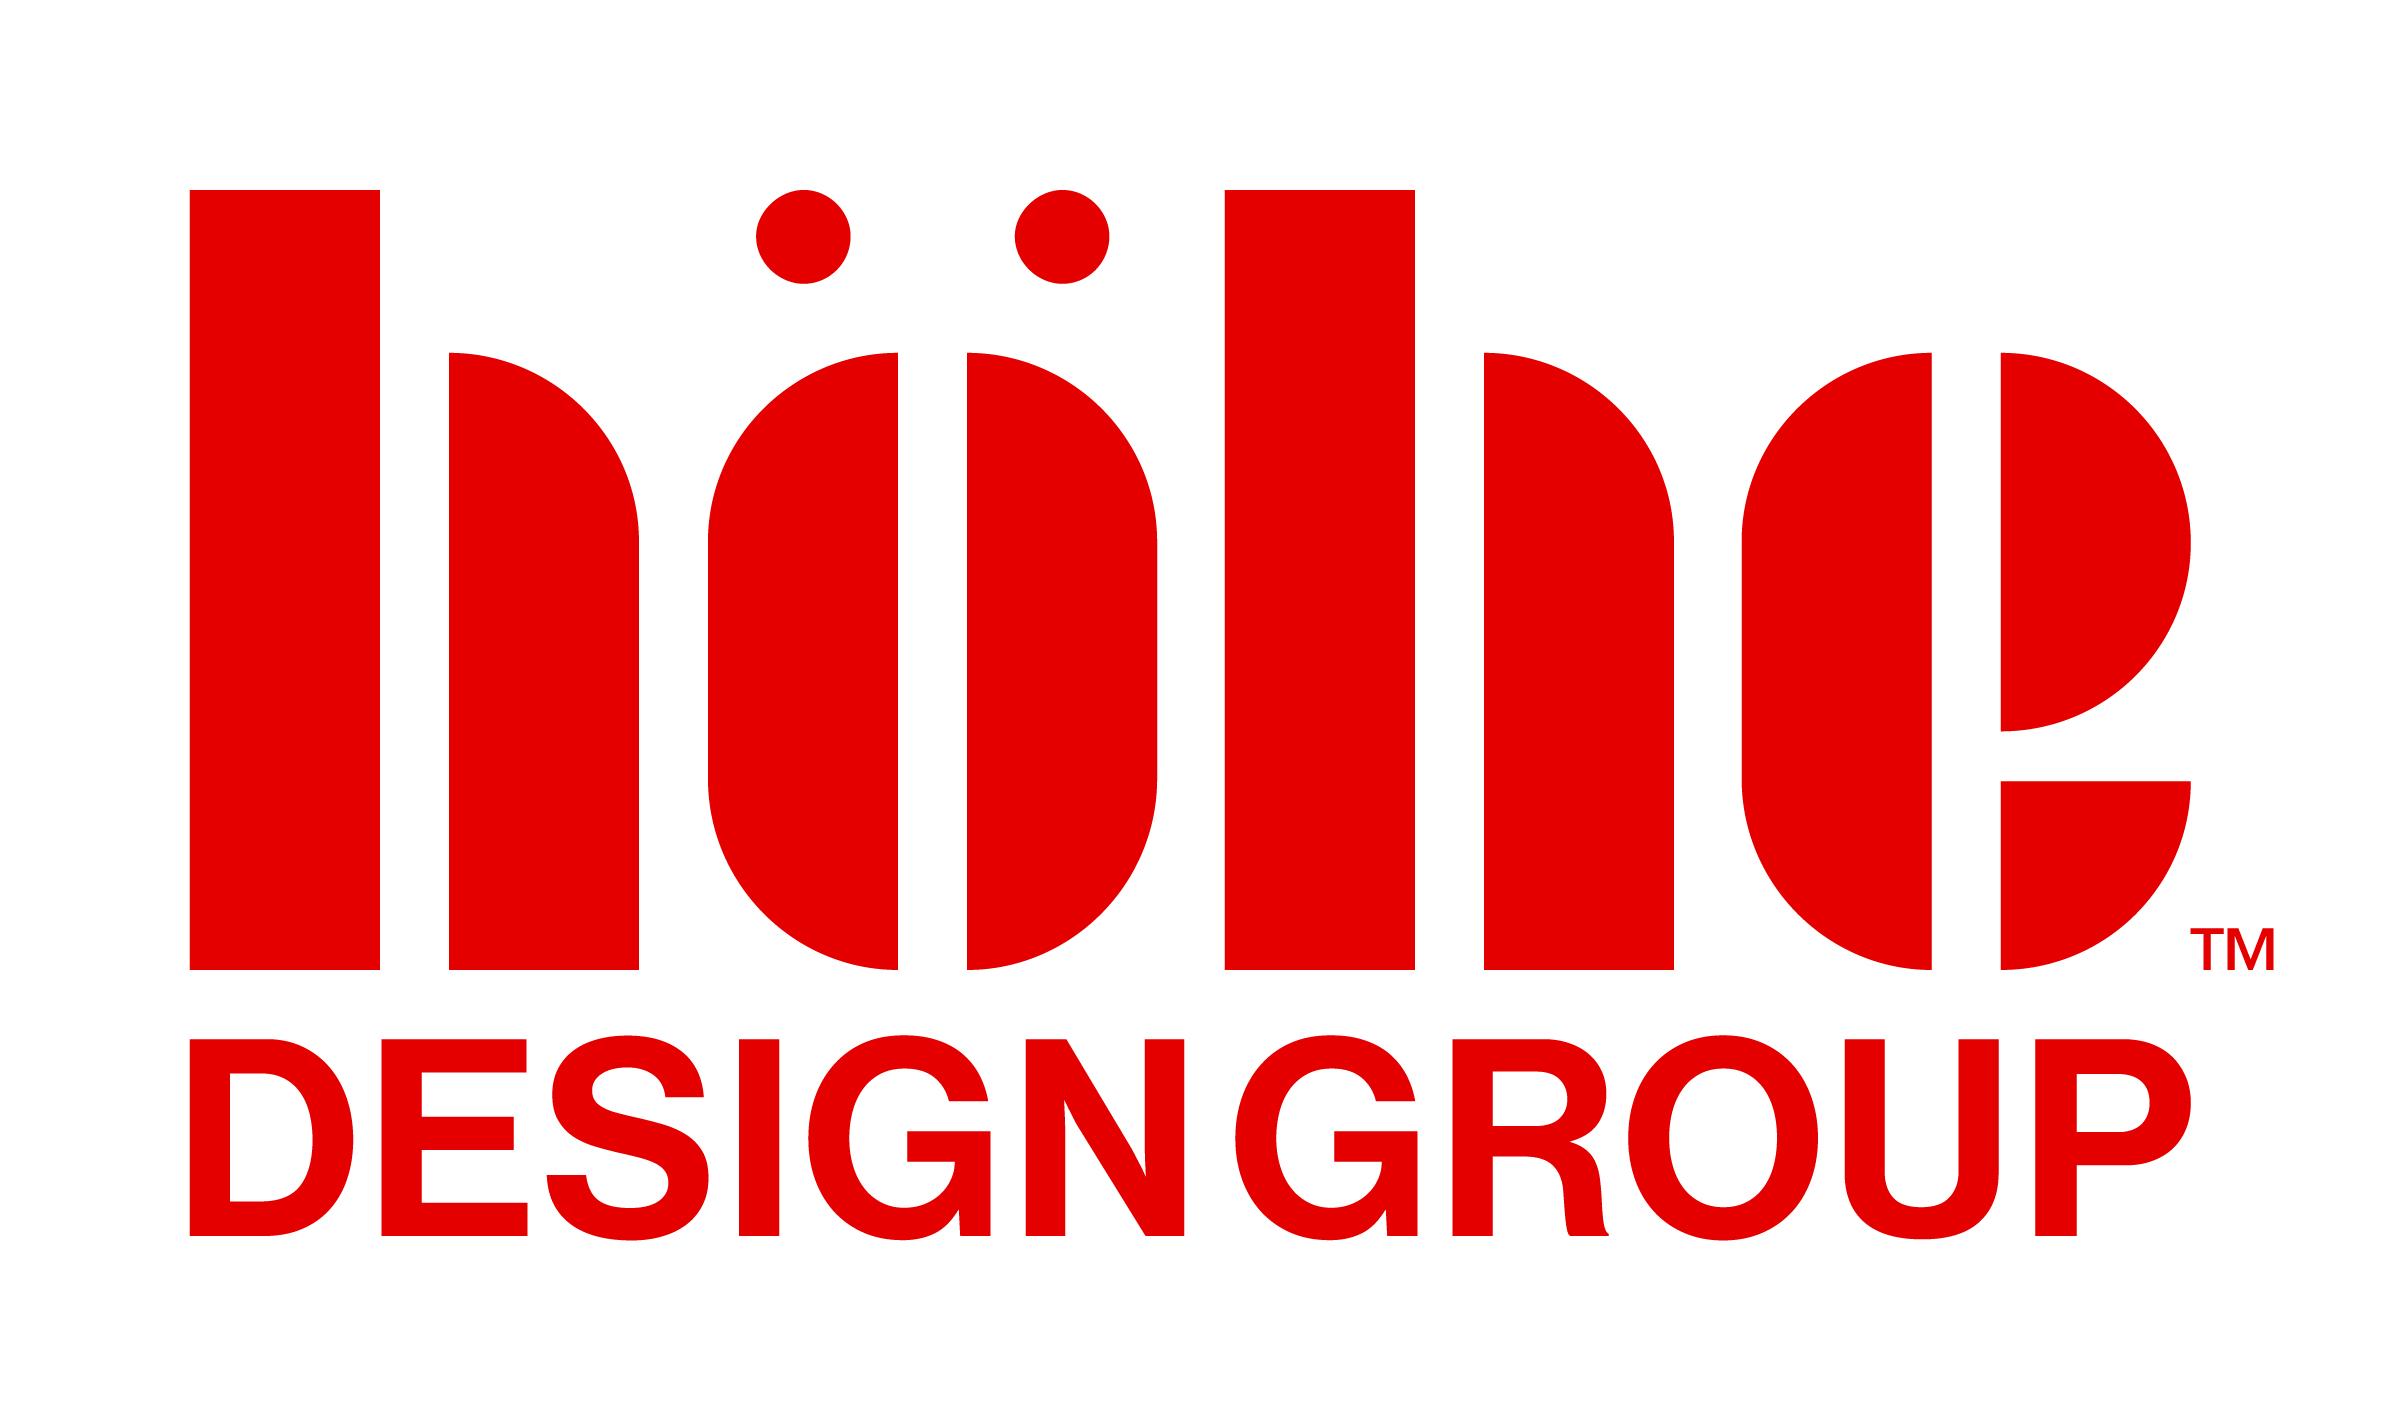 Hohe Design Group